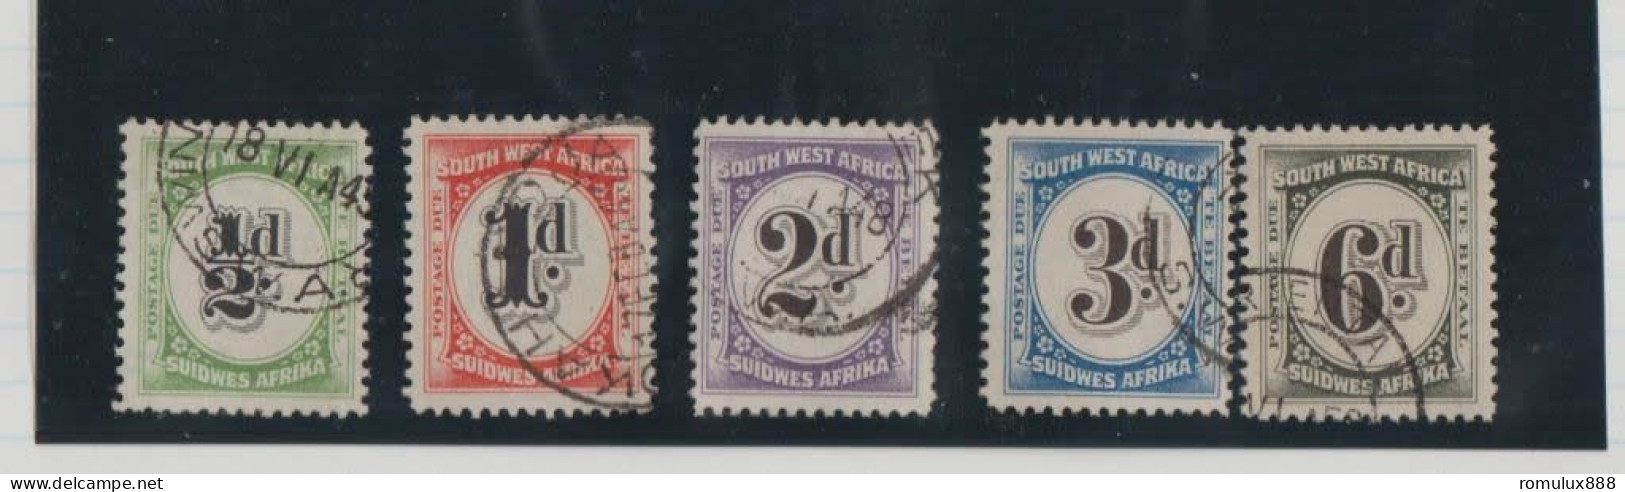 SWA 1931 POSTAGE DUES-GOOD USED SET OF 5 -SG D47-D51 - Südwestafrika (1923-1990)